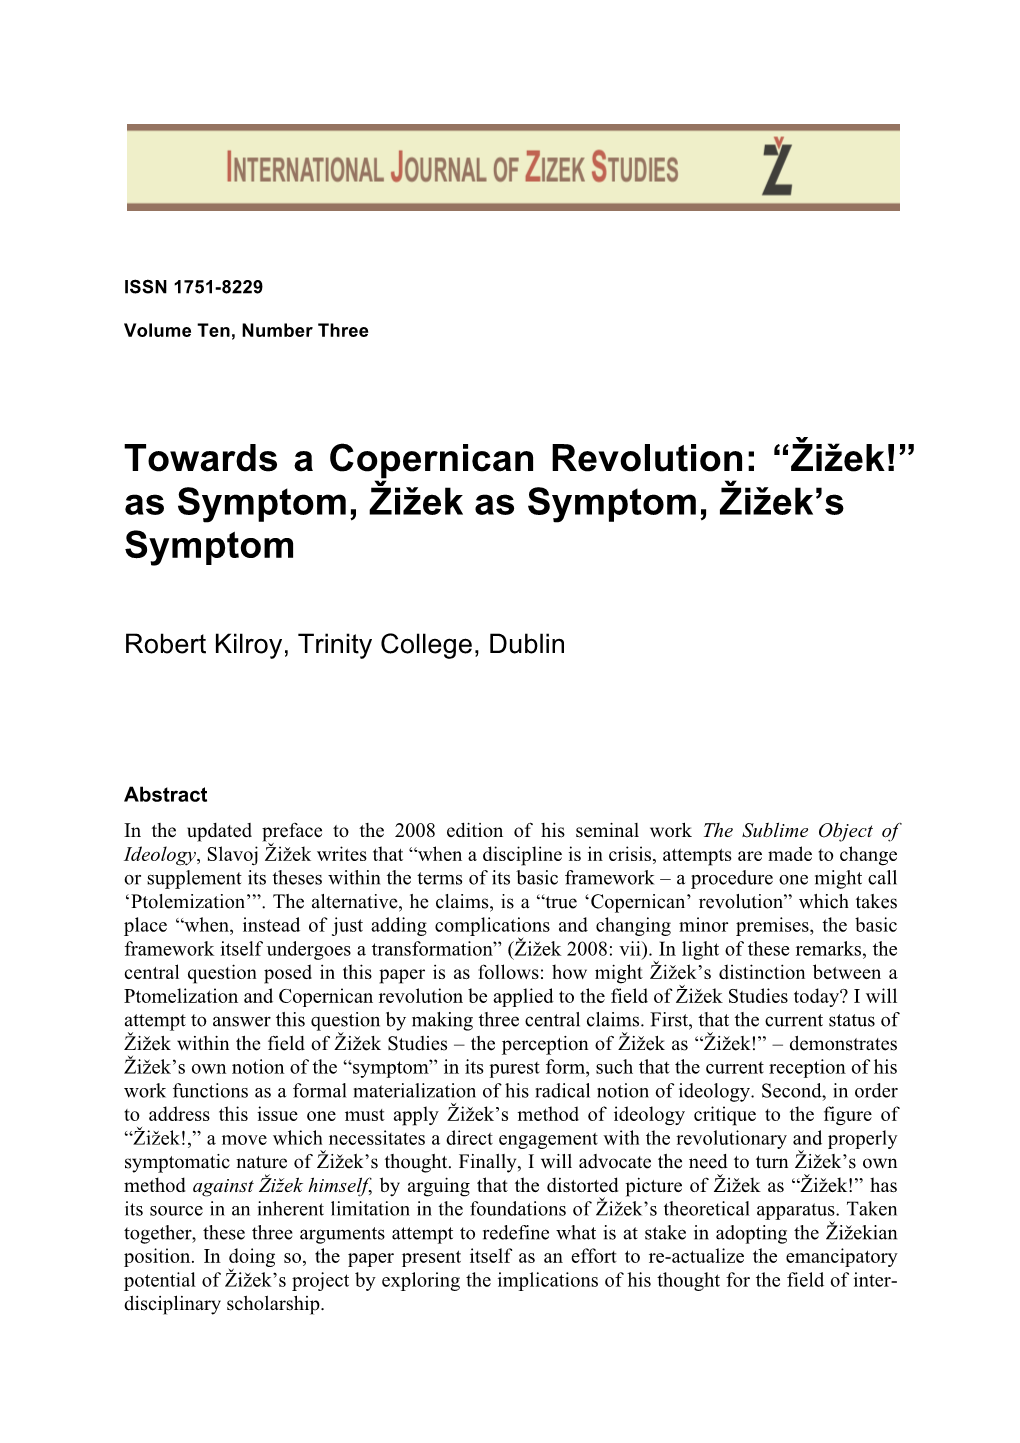 Towards a Copernican Revolution: “Žižek!” As Symptom, Žižek As Symptom, Žižek's Symptom